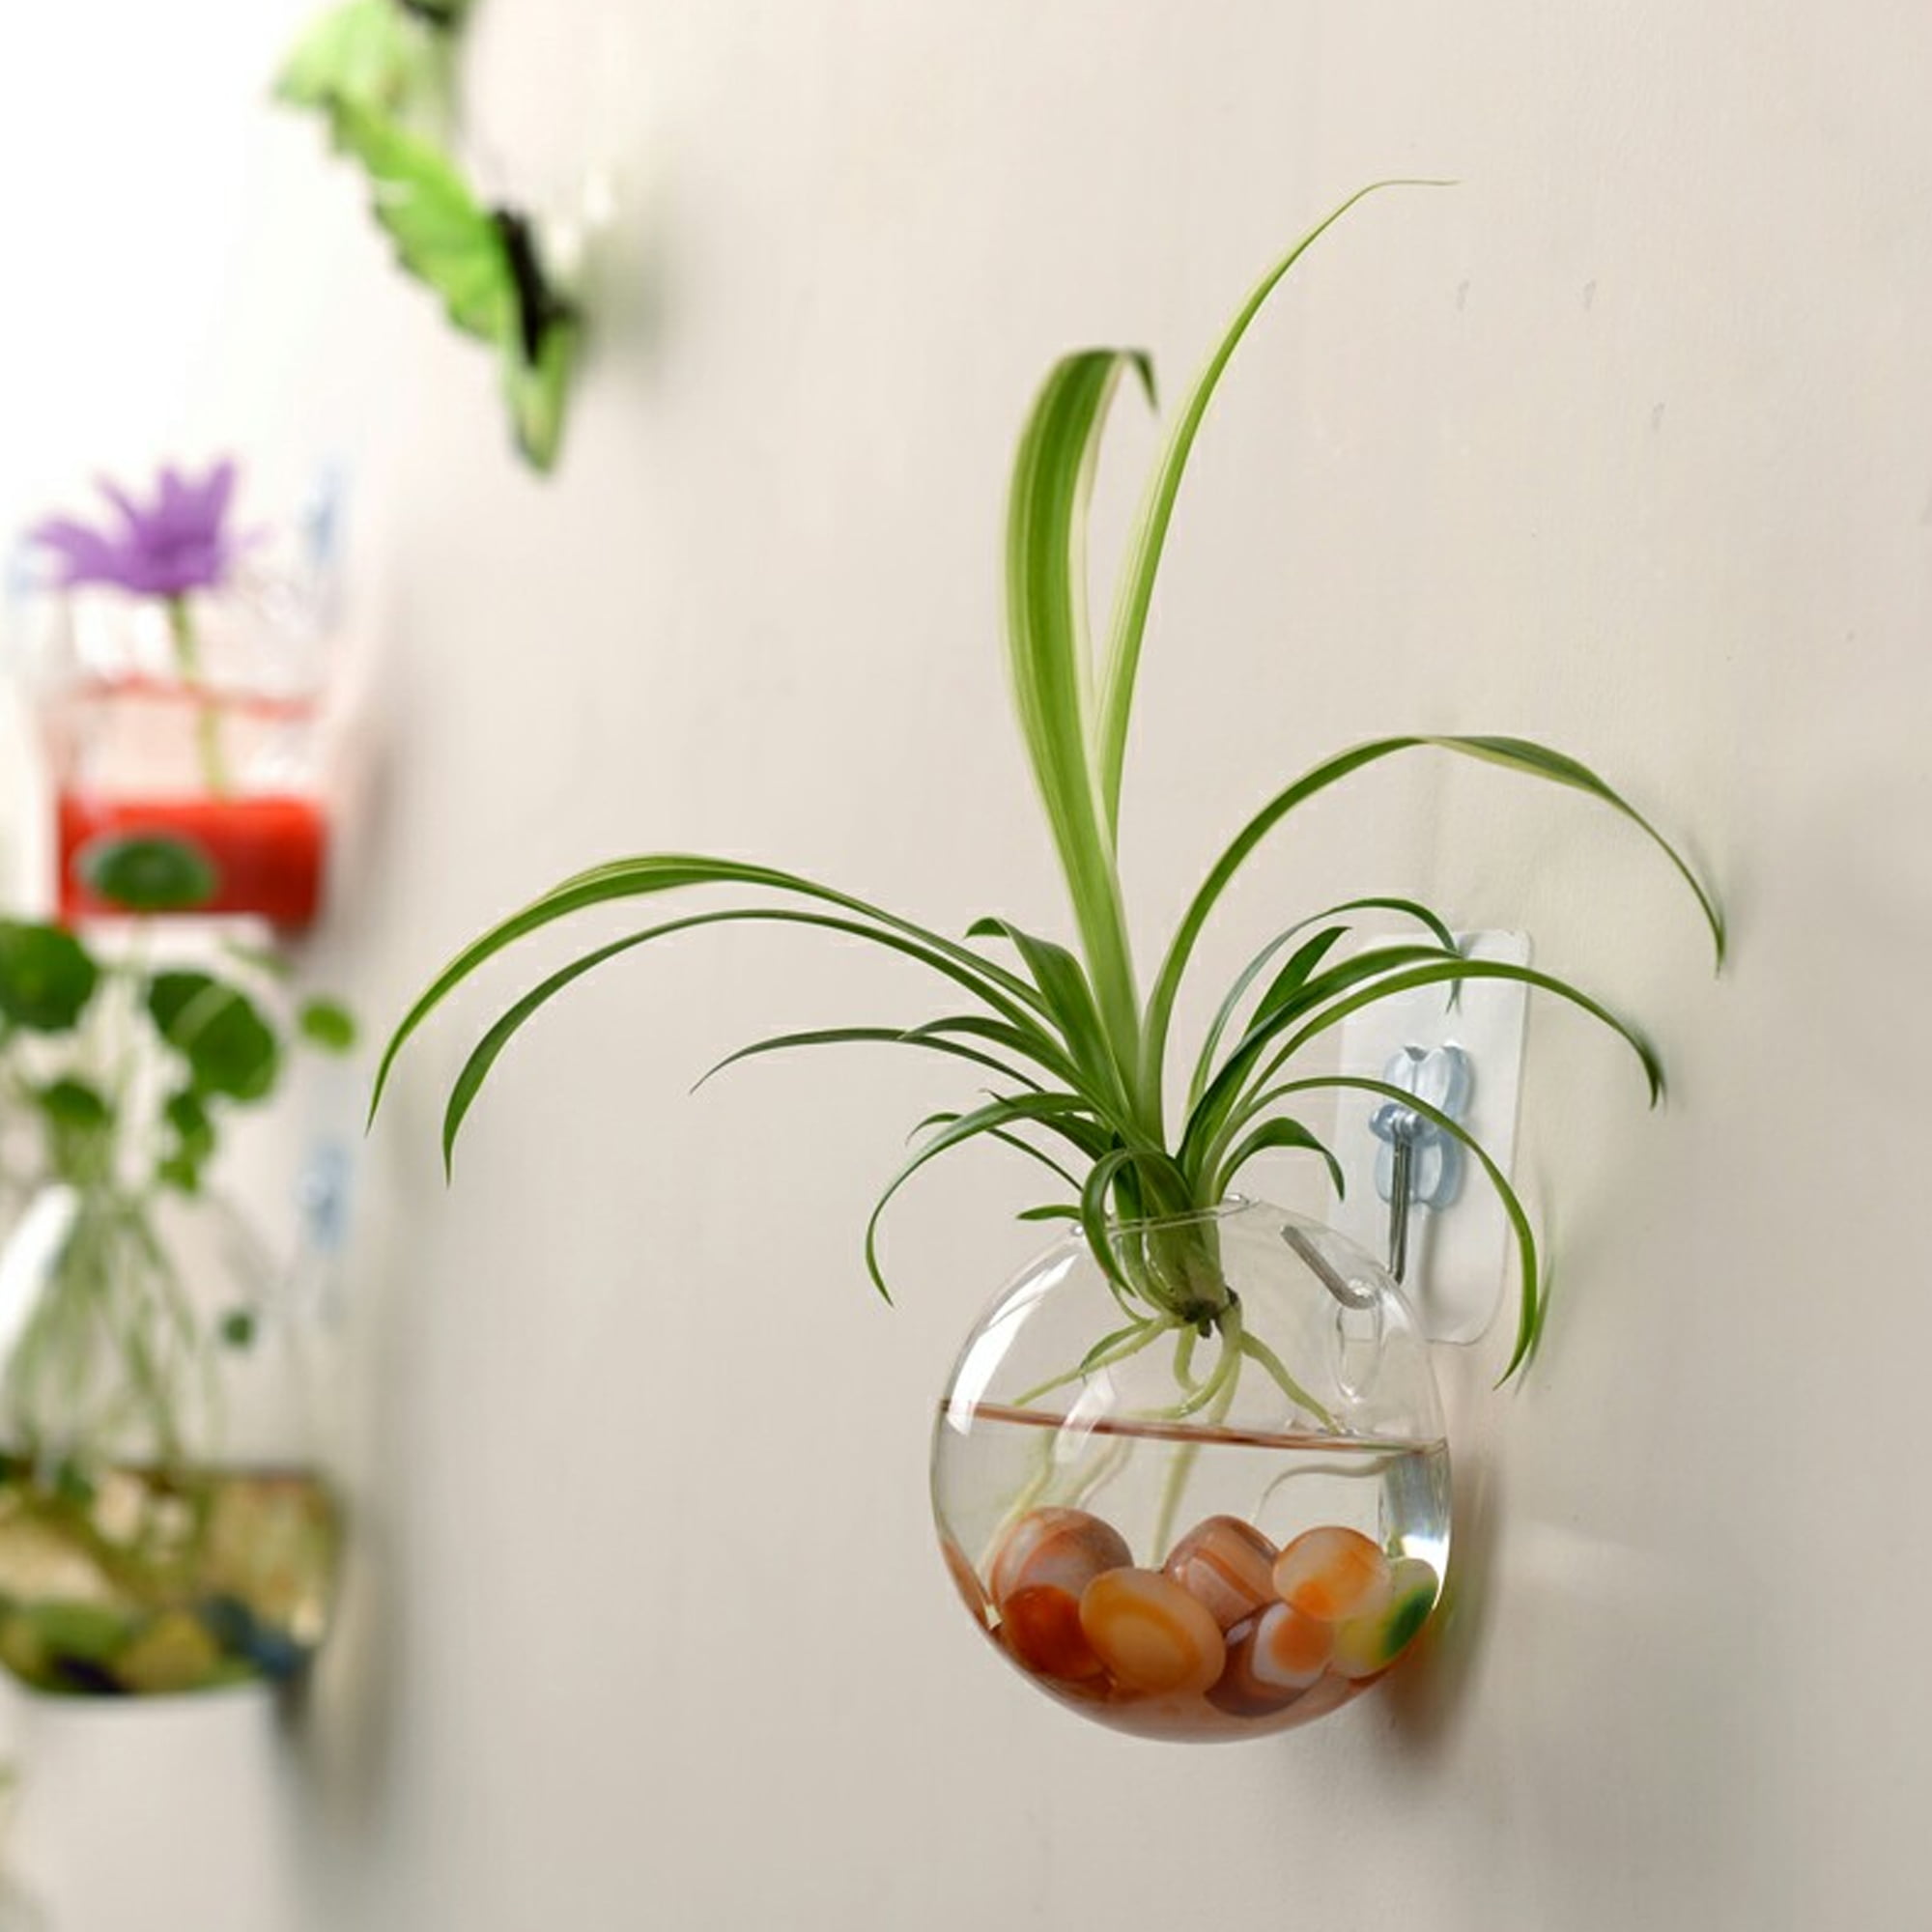 New Hanging Glass Flower Planter Vase Terrarium Container Home Garden Ball Decor 